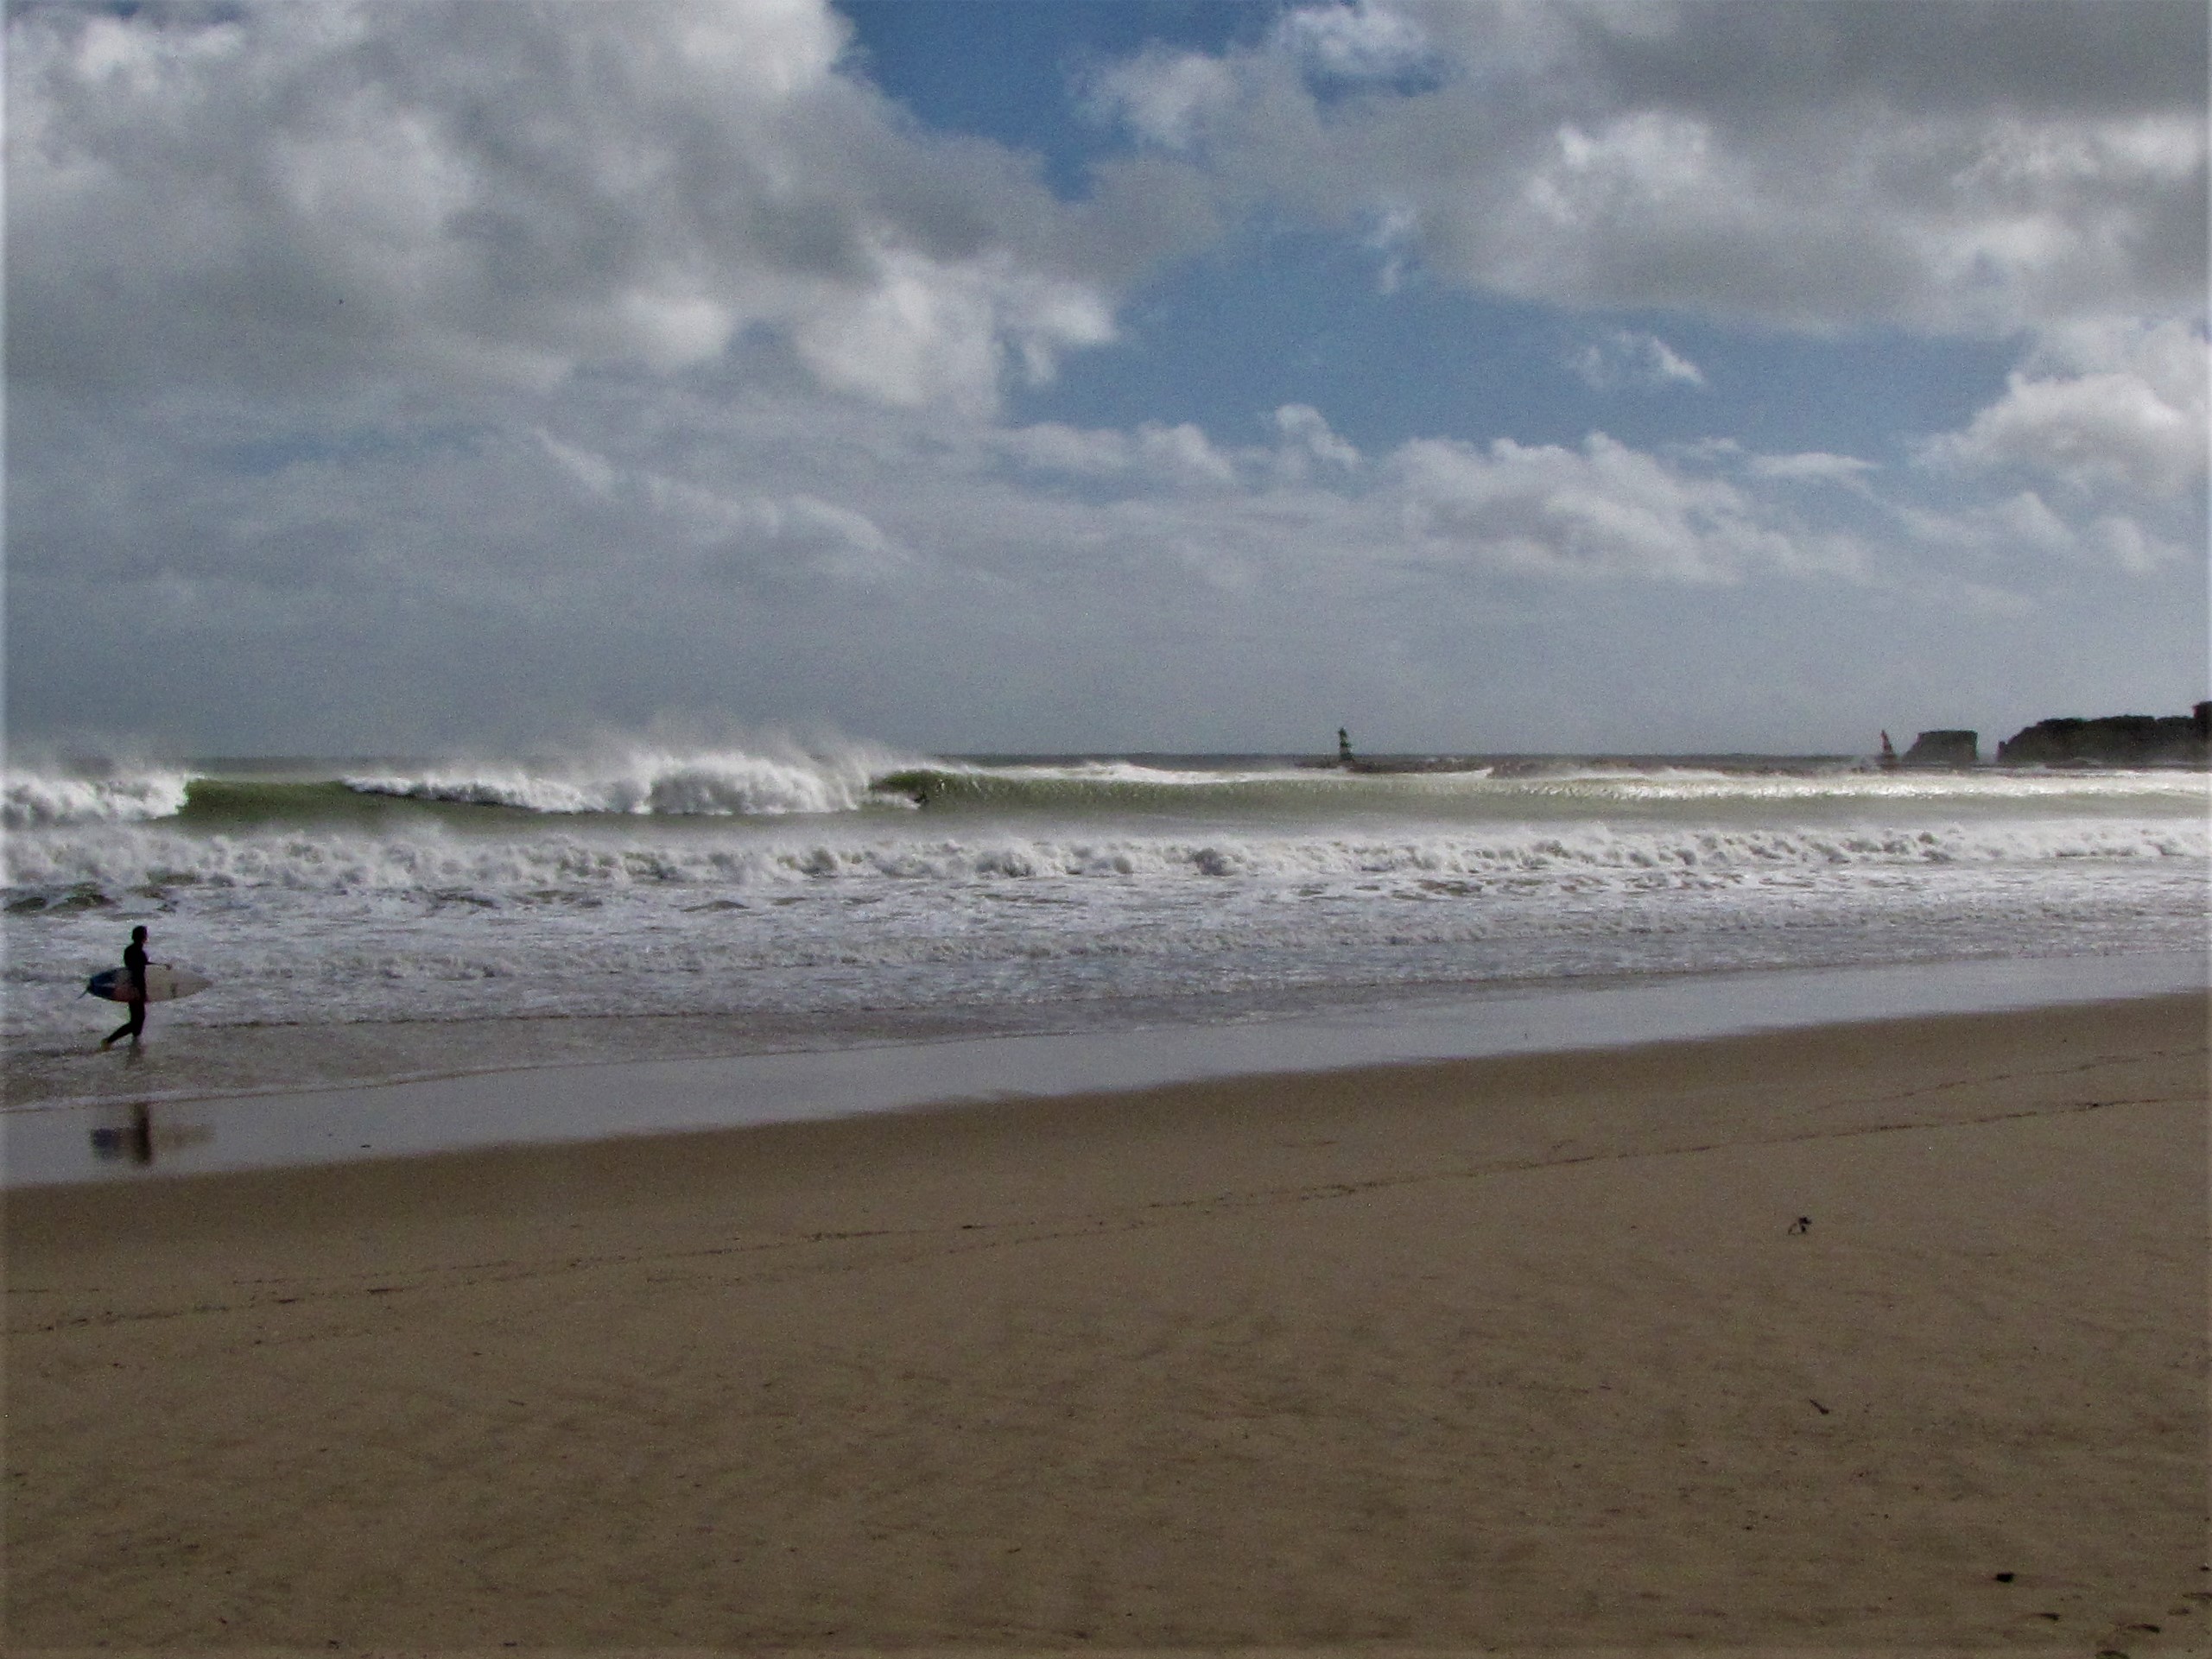 epic left hand wave surfed at meia praia